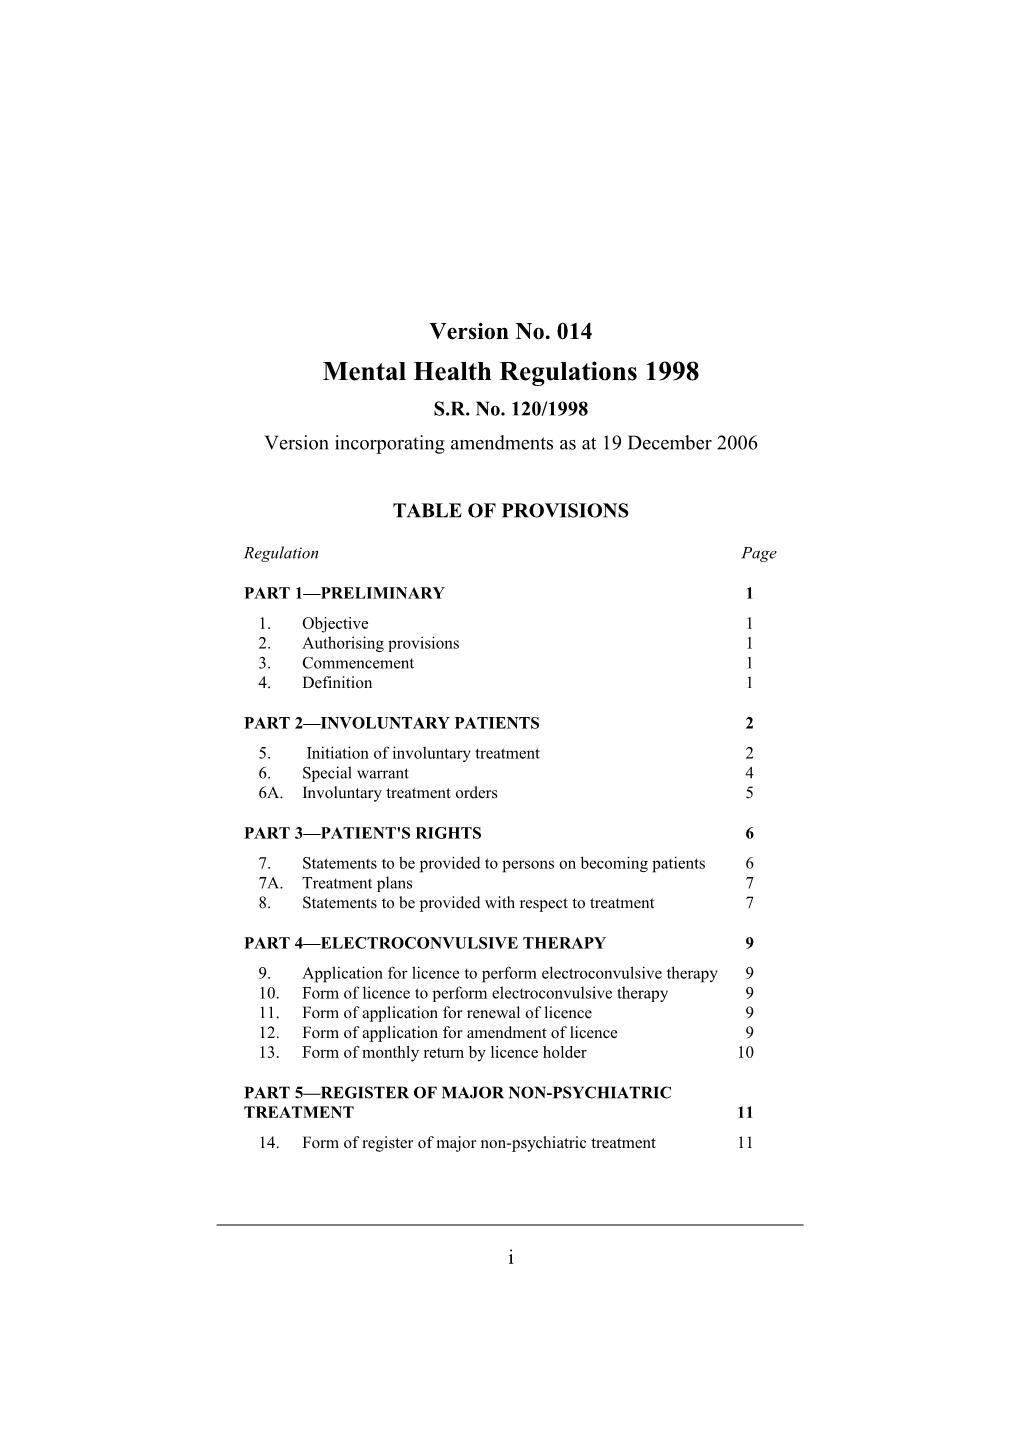 Mental Health Regulations 1998